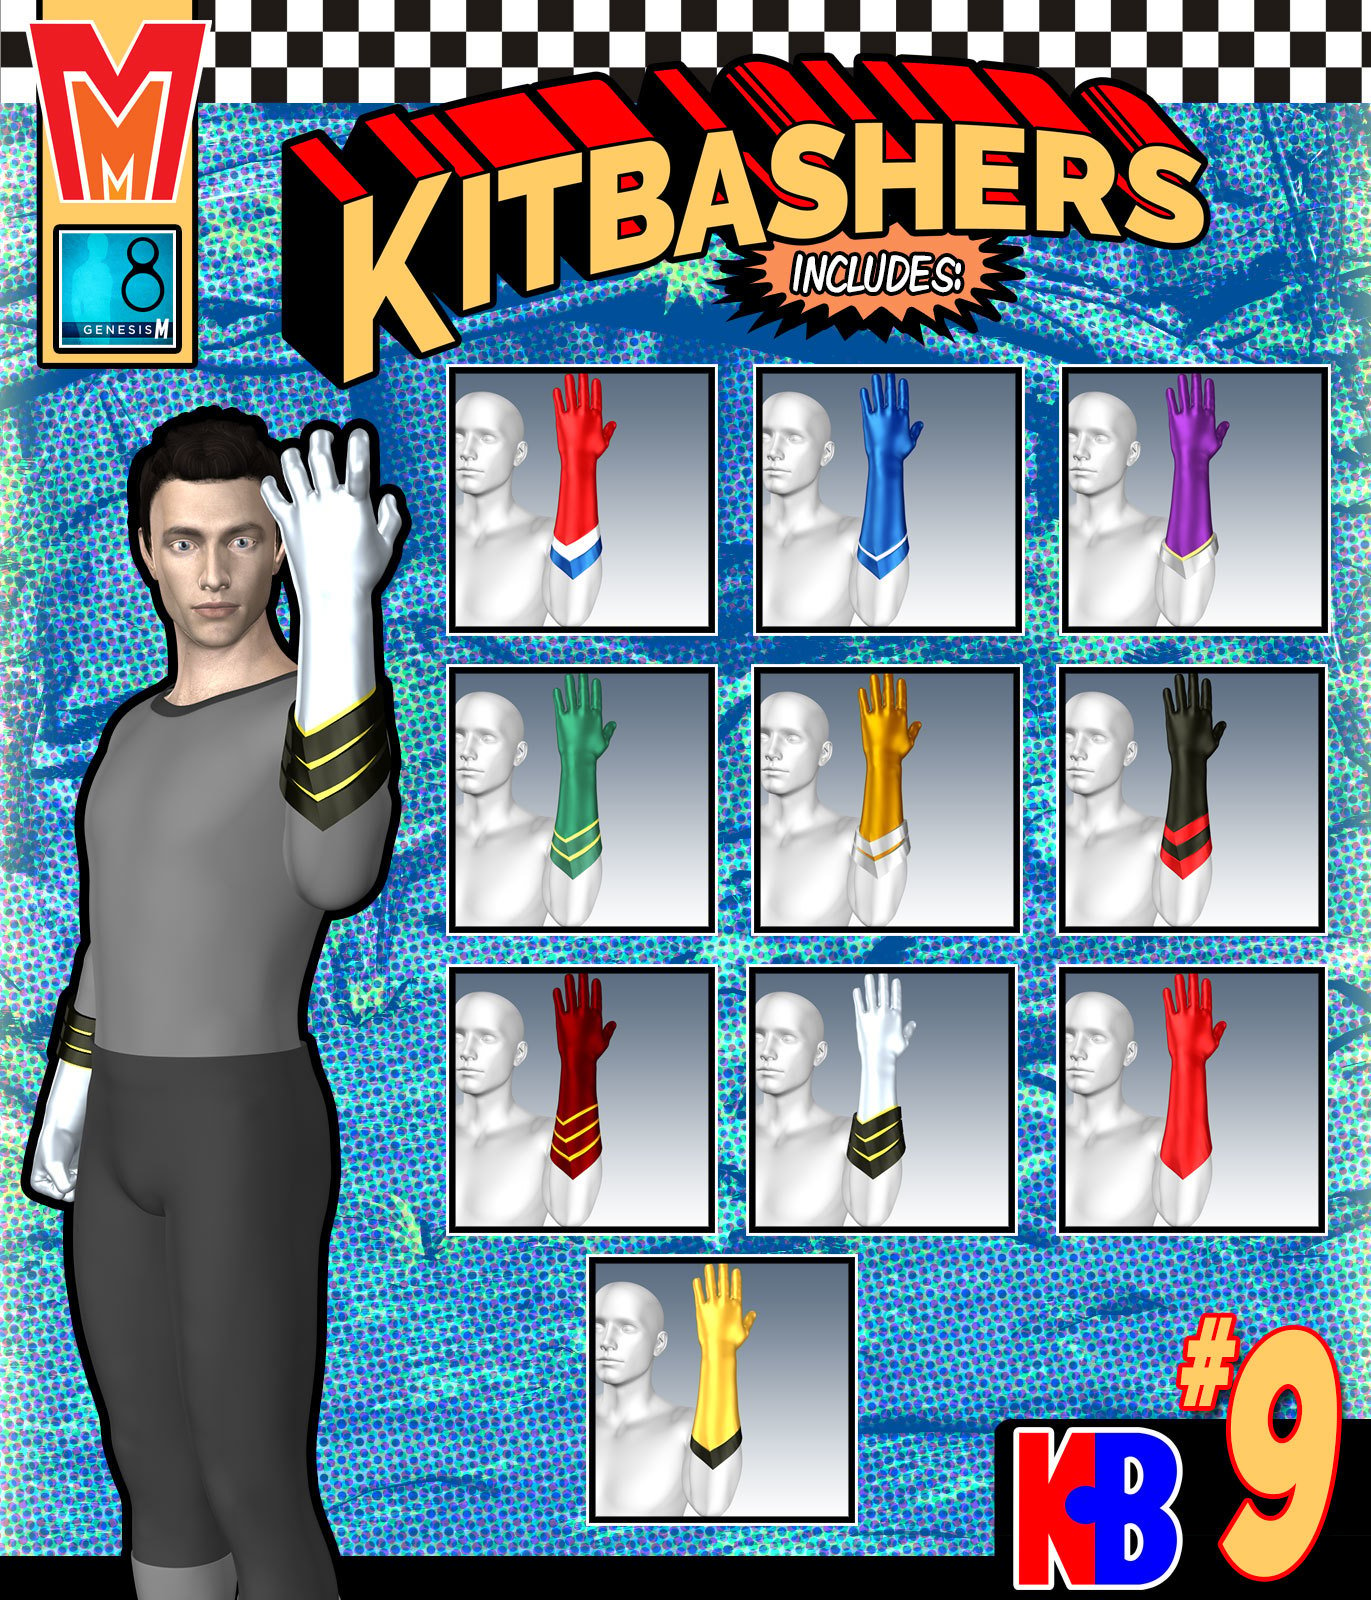 Kitbashers 009 MMG8M by: MightyMite, 3D Models by Daz 3D